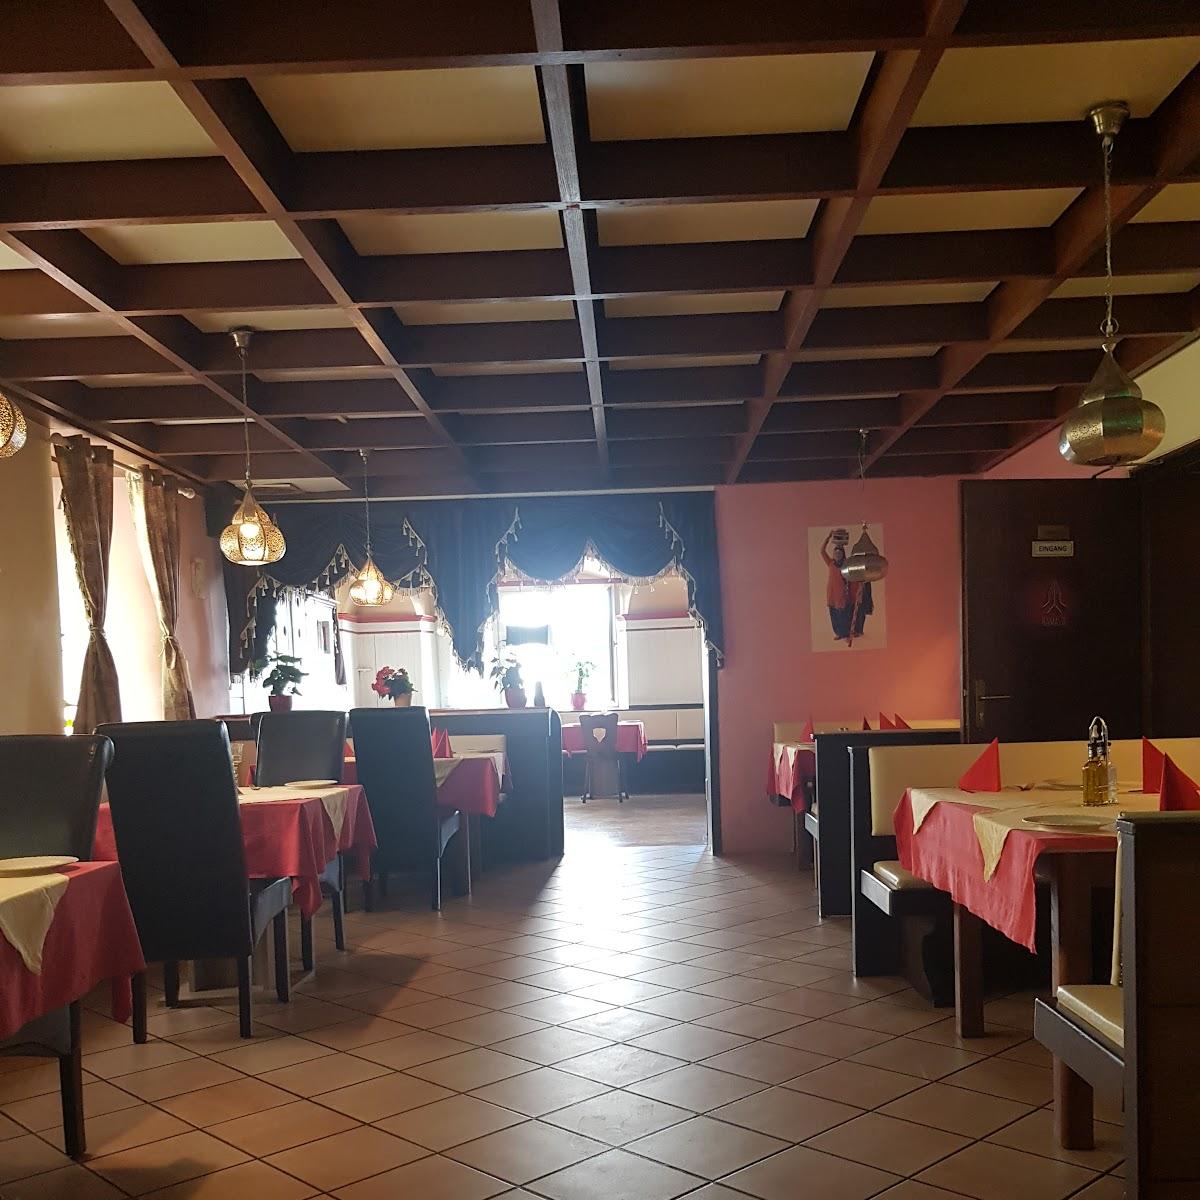 Restaurant "Taste of Punjab" in Isny im Allgäu